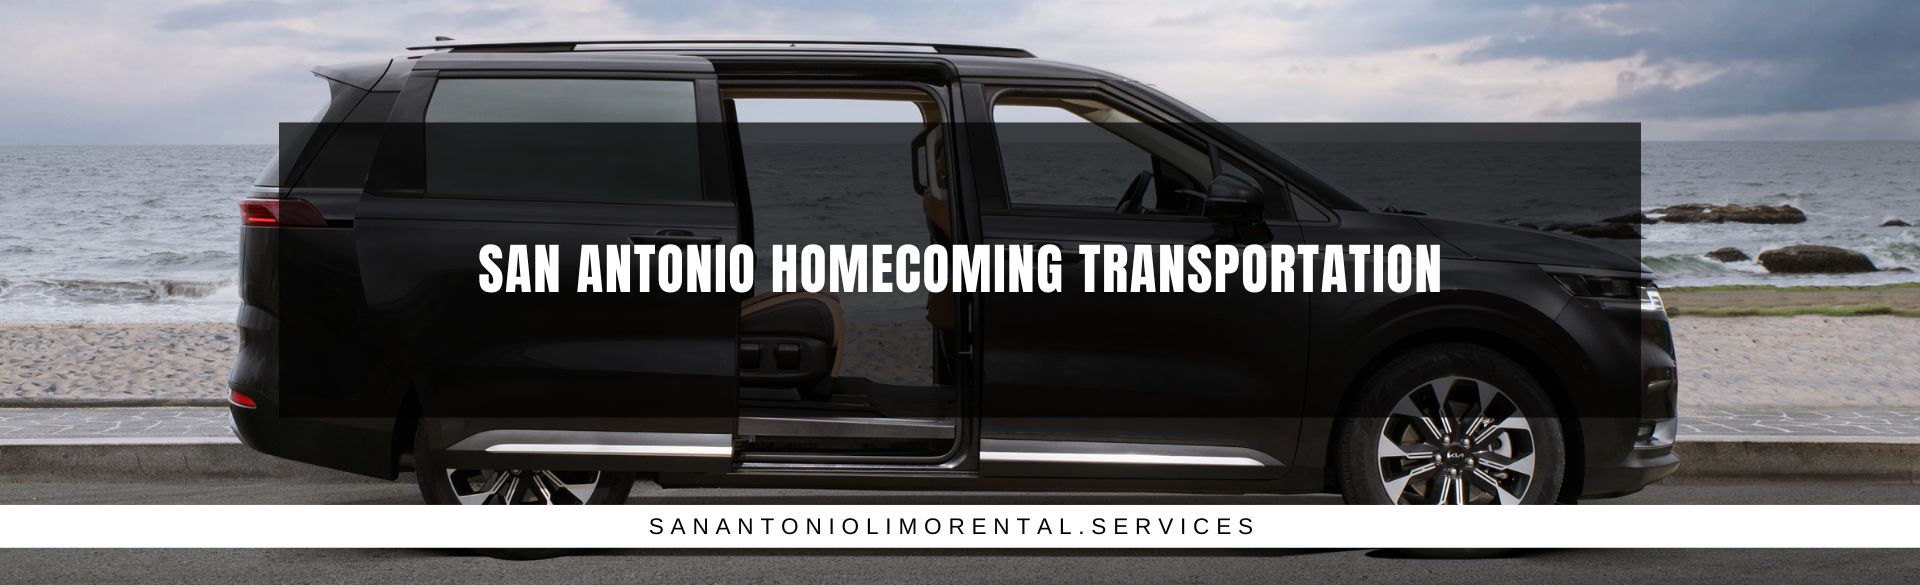 San Antonio Homecoming transportation